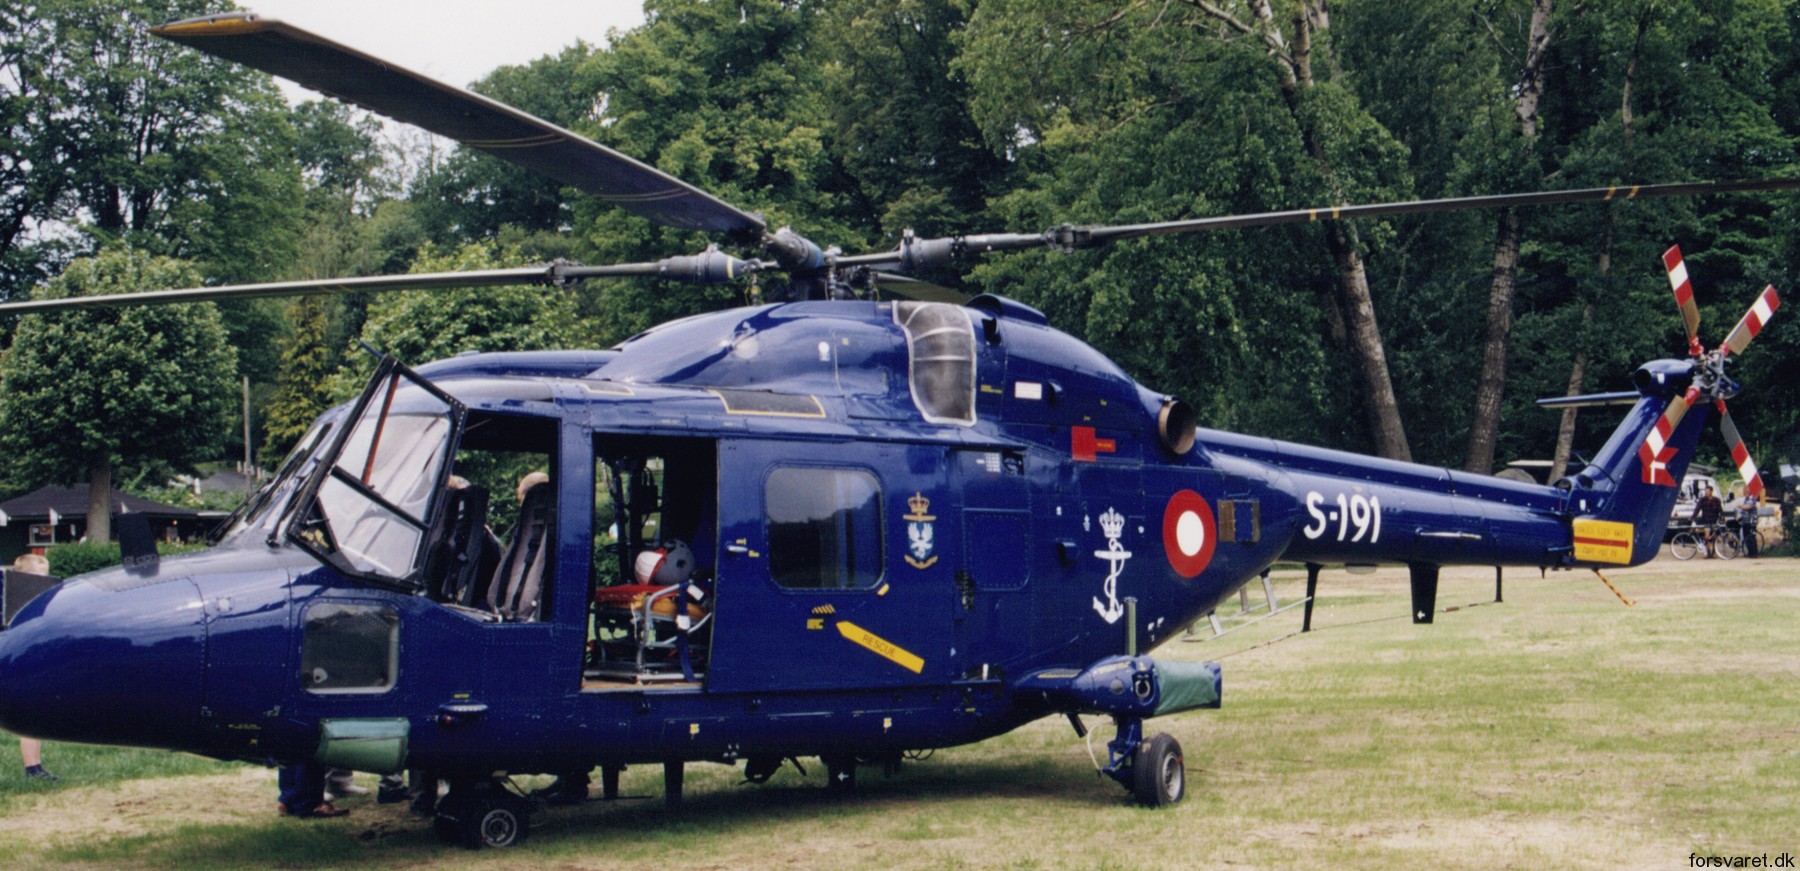 lynx mk.80 mk.90b helicopter westland royal danish navy air force kongelige danske marine flyvevabnet s-191 02